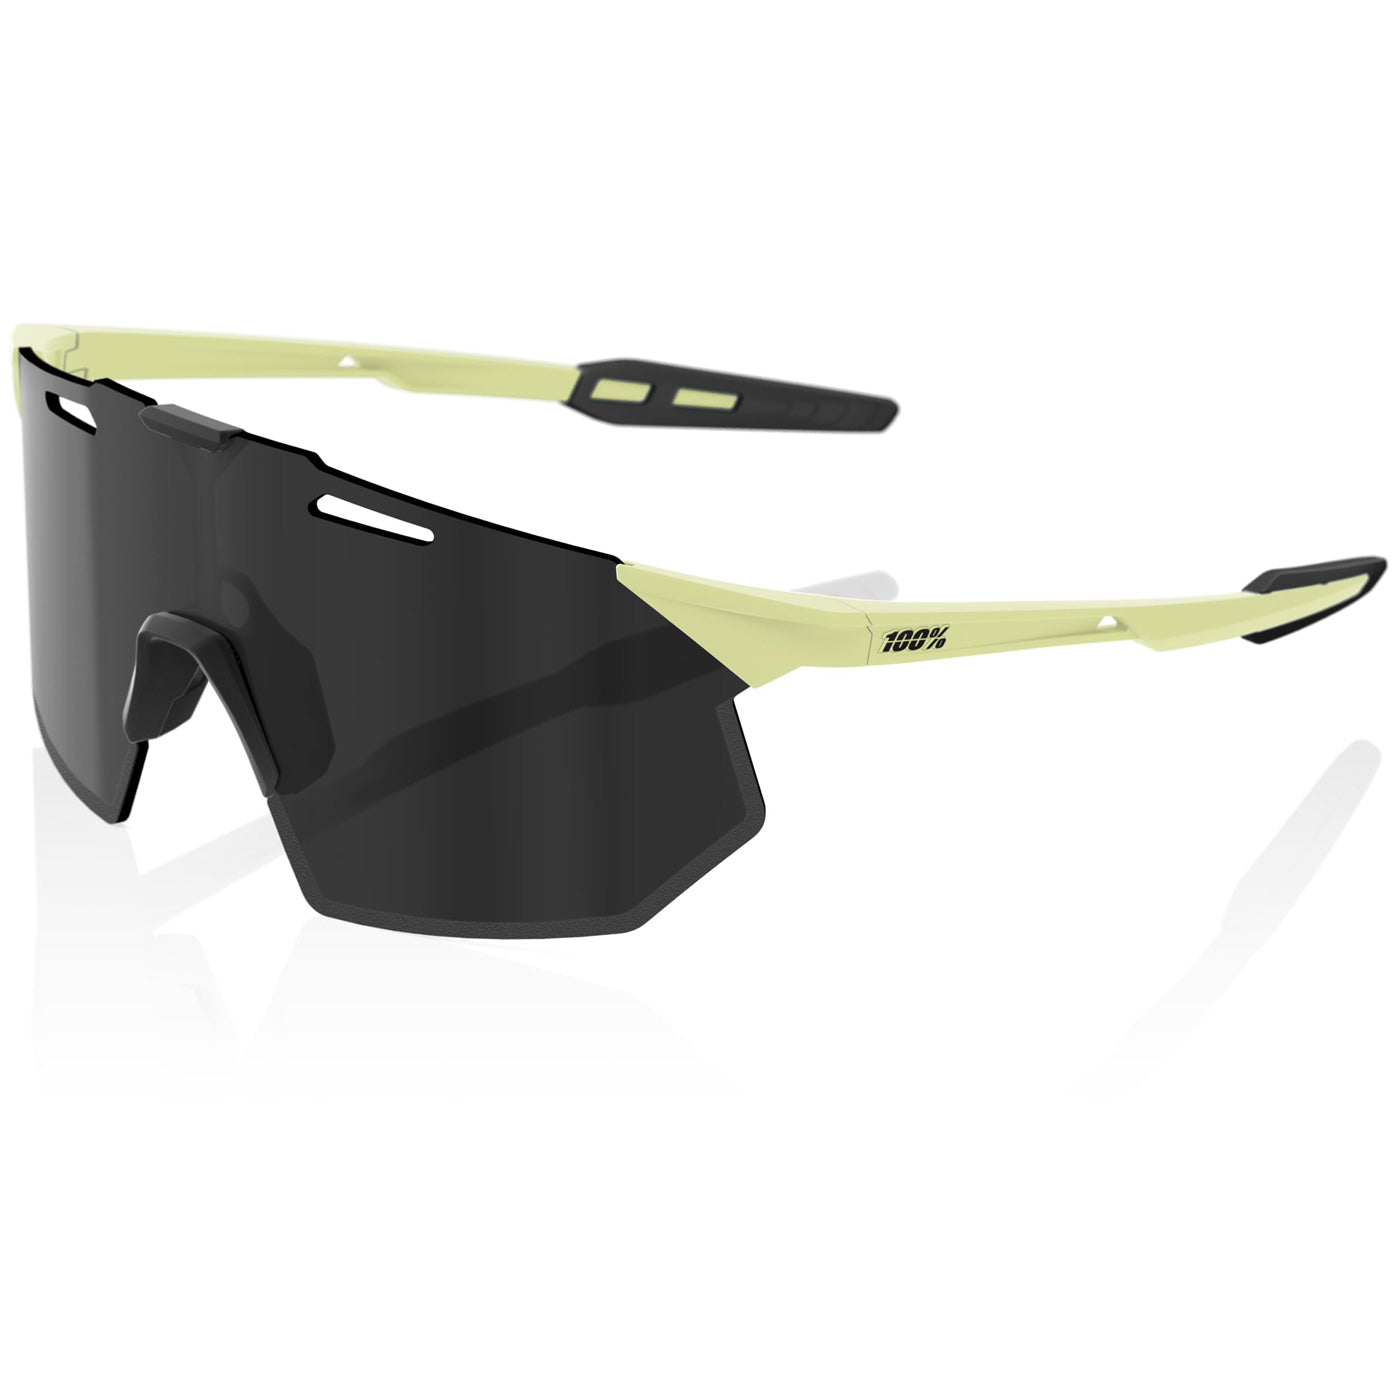 % Hypercraft SQ sunglasses   Soft Tact Glow Black Mirror